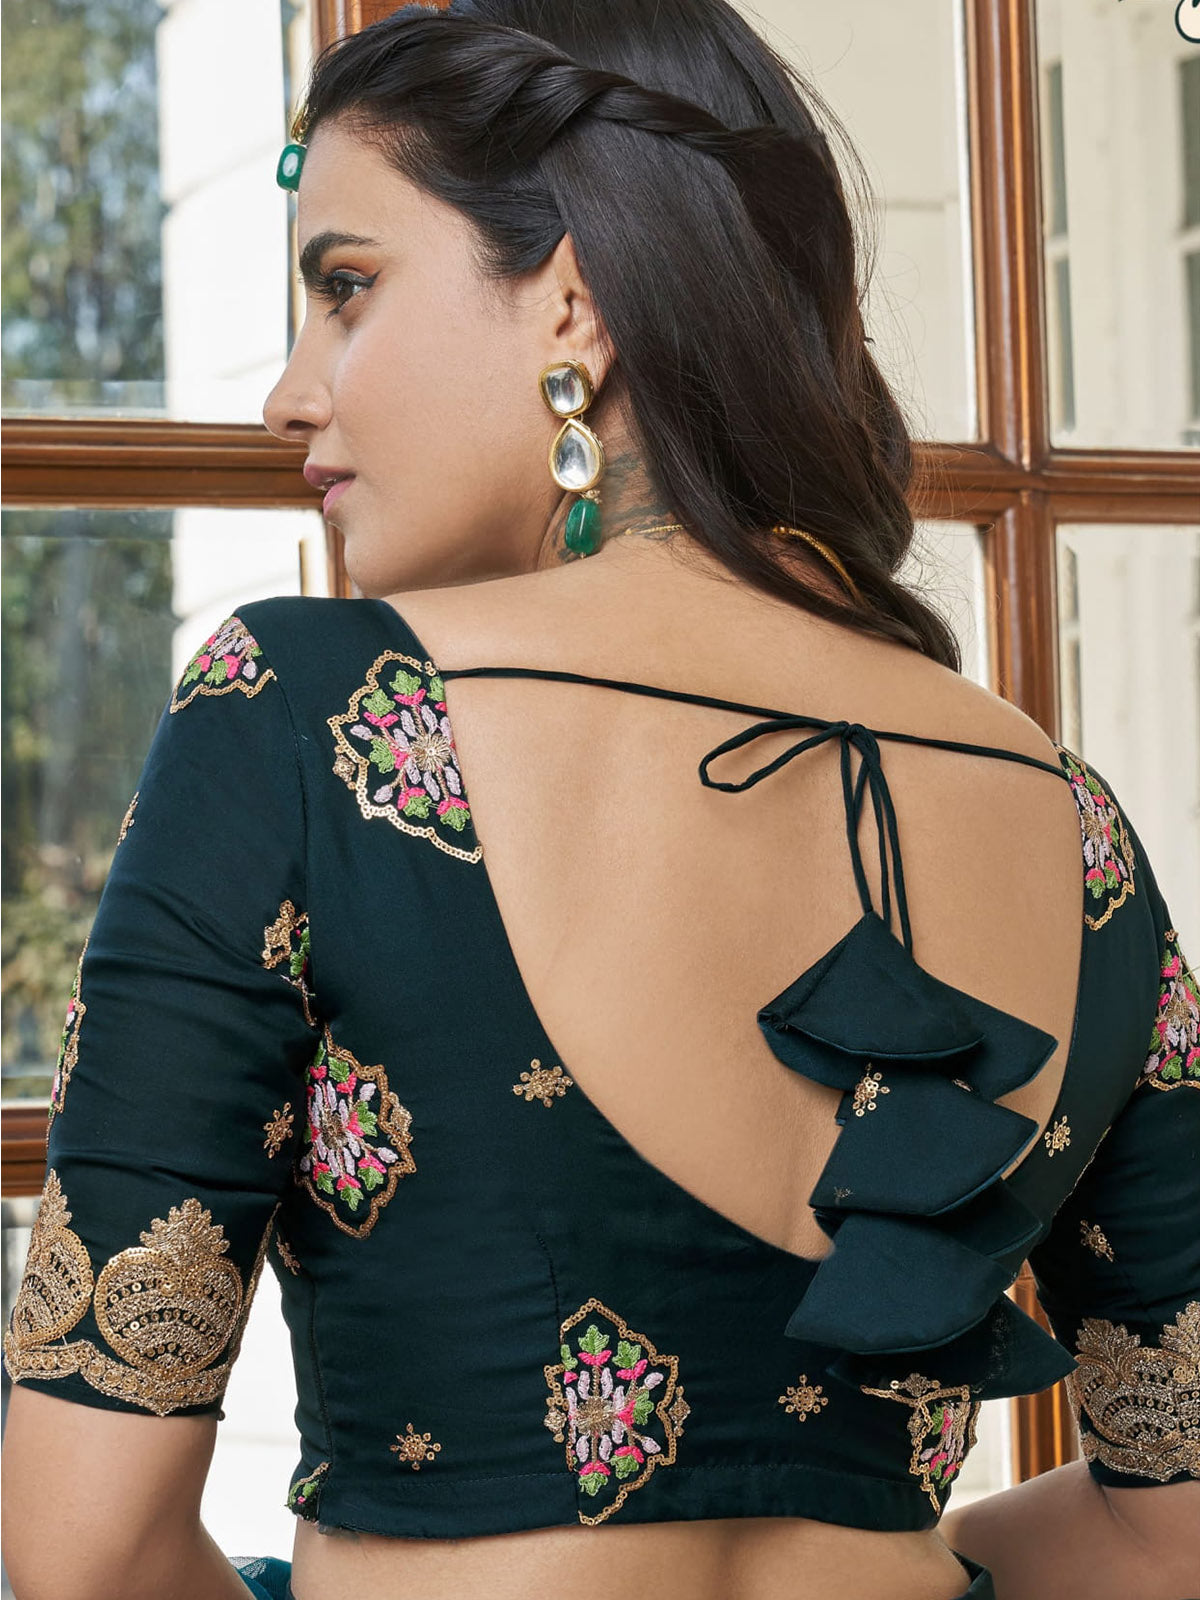 6 unique attractive comfortable actress inspired lehenga blouse designs for  front and back - Blouse Design: लहंगे के साथ बनवाएं यूनिक डिजाइन के ये  ब्लाउज, मिलेगा अट्रैक्टिव लुक, फैशन न्यूज